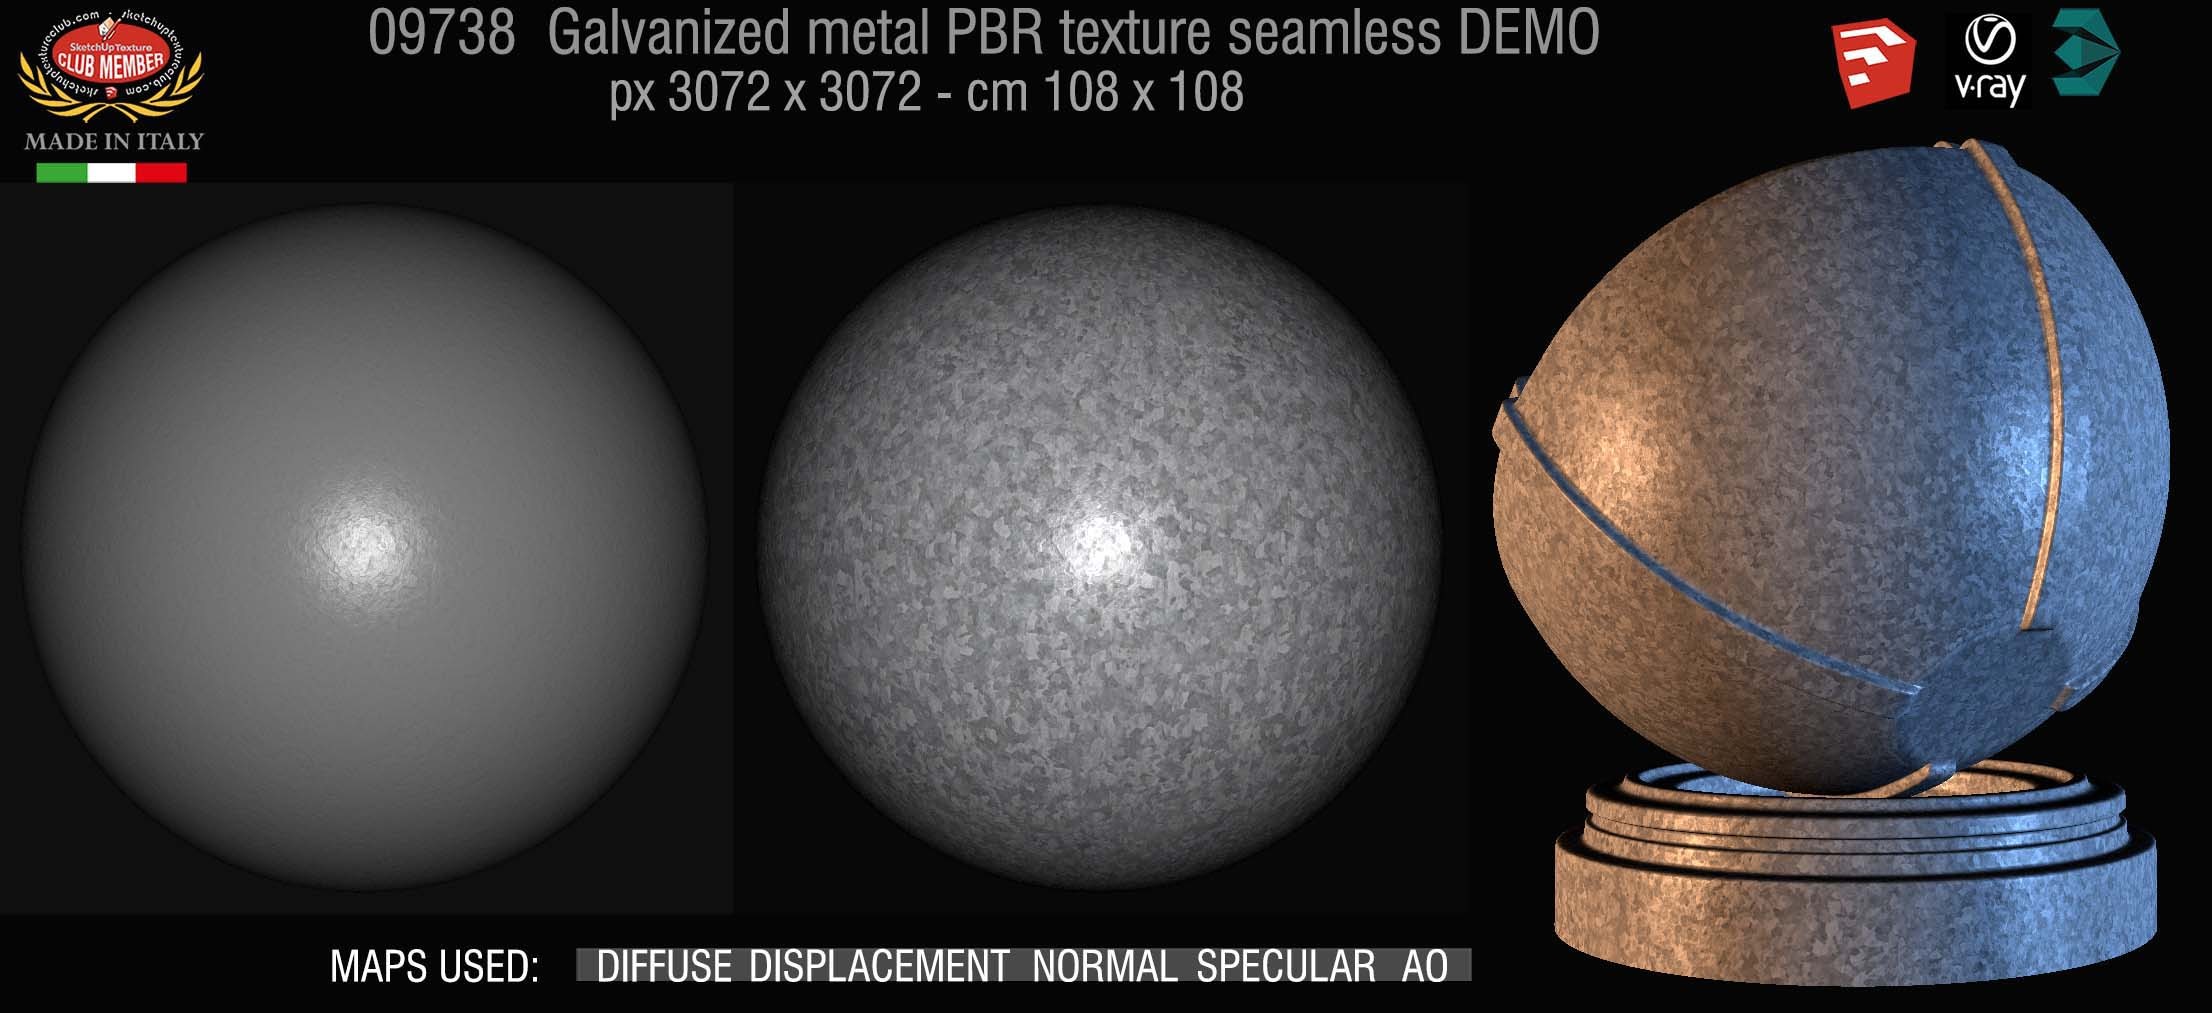 09738 Galvanized metal PBR texture seamless DEMO